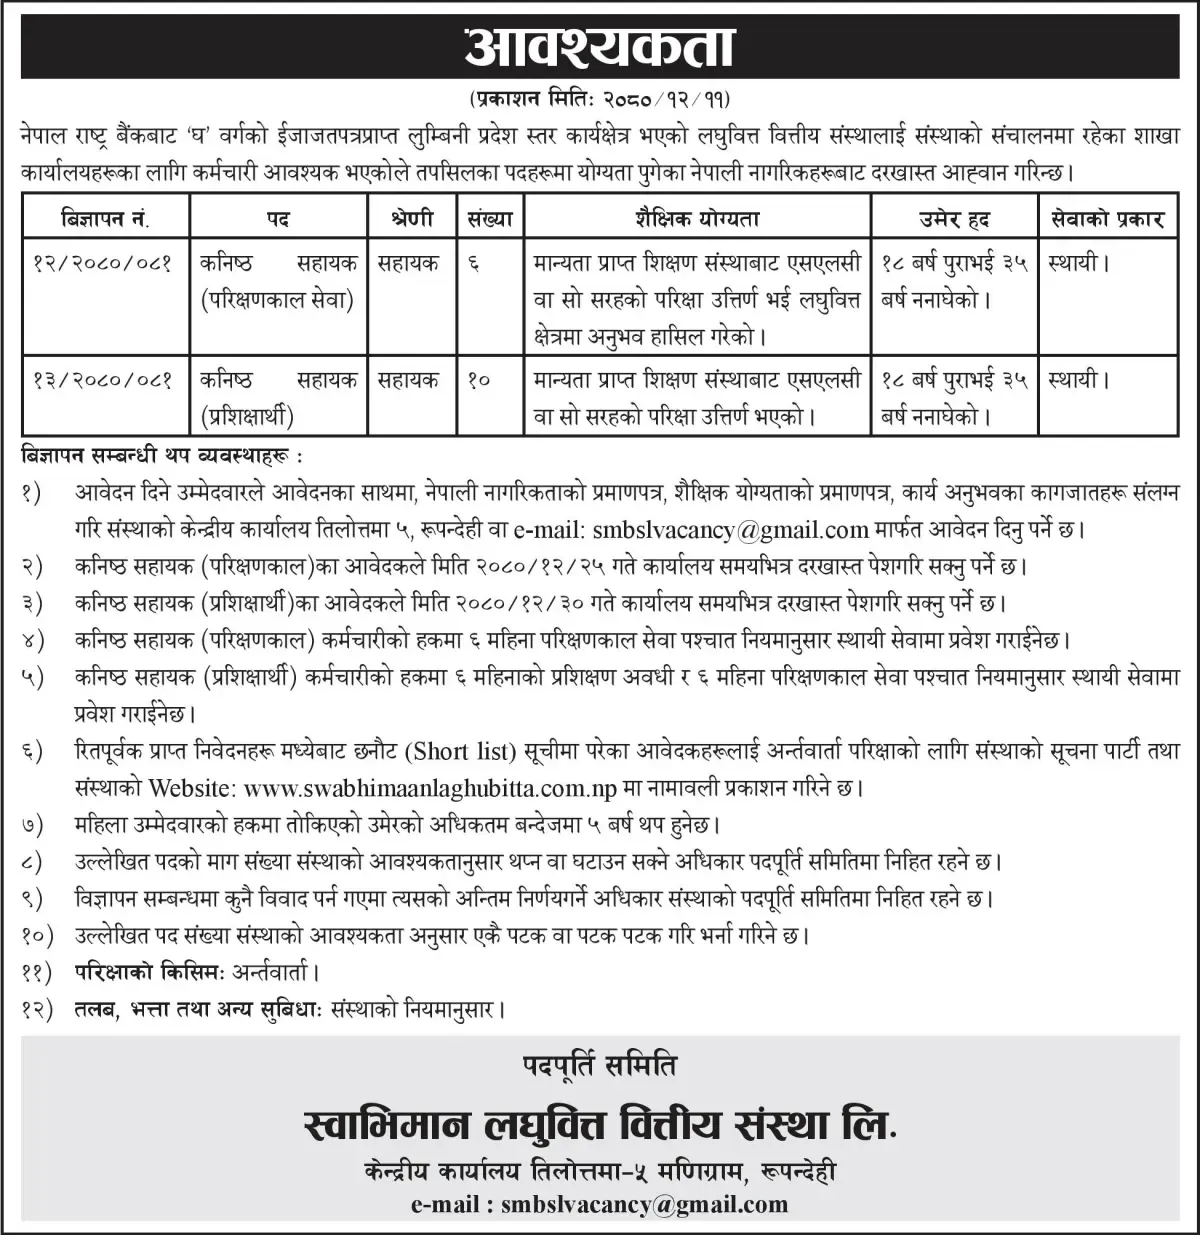 Swabhimaan Laghubitta Bittiya Sanstha Ltd Vacancy 2080 for Junior Assistant